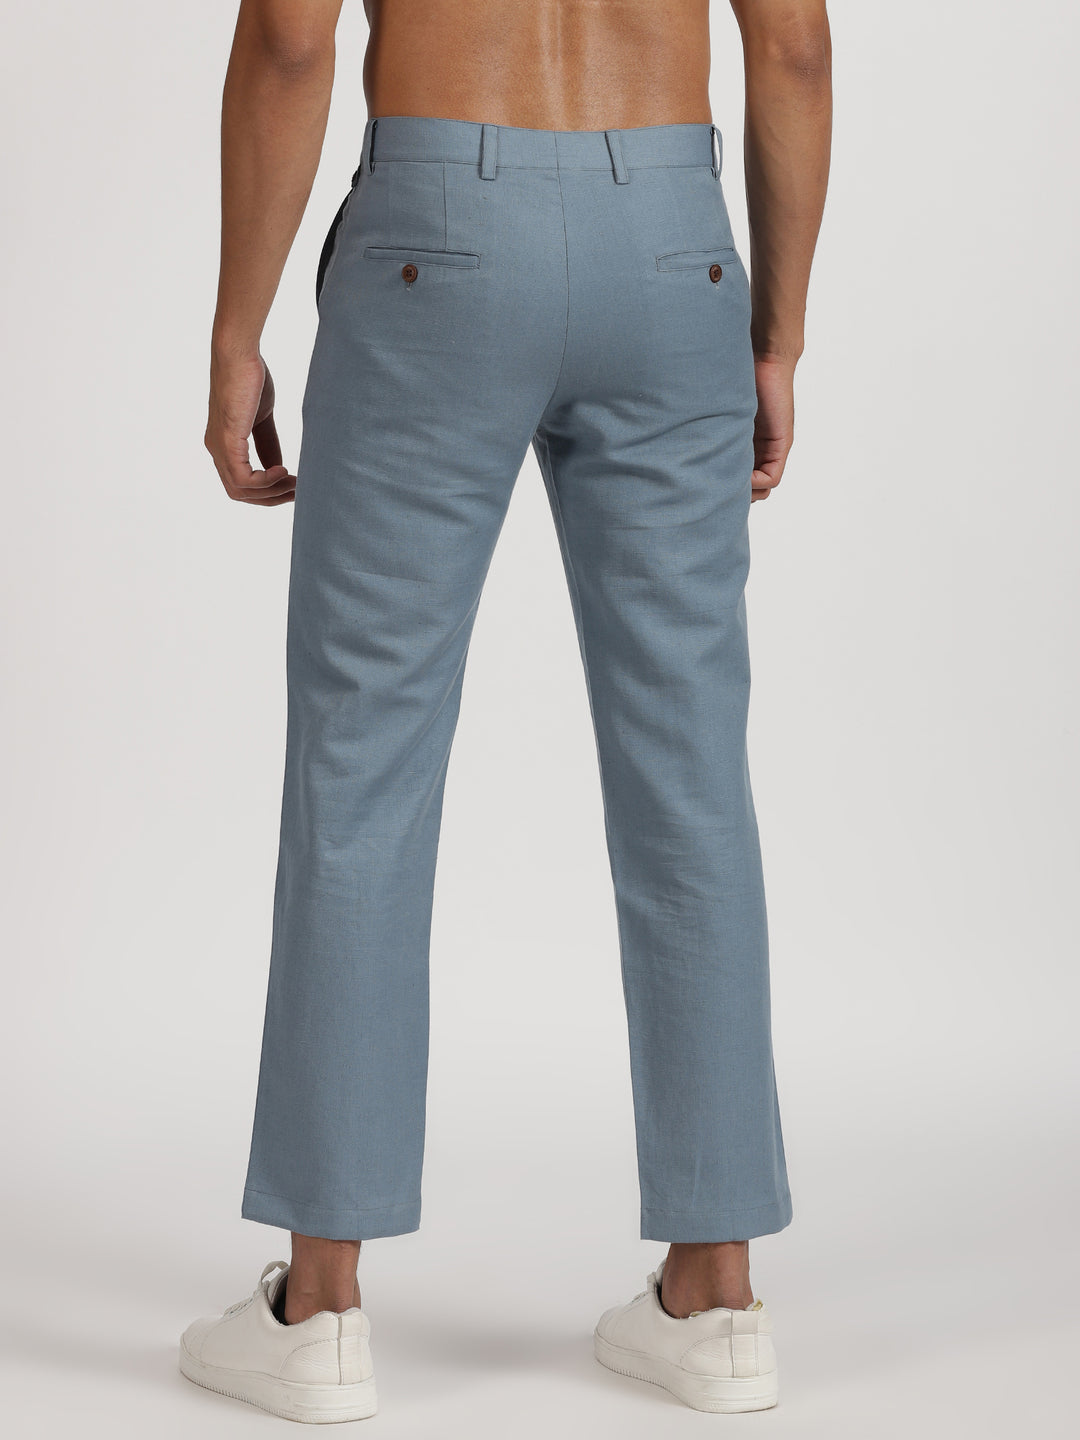 Ian Chino Pants - Men's Linen Trousers - Teal Blue